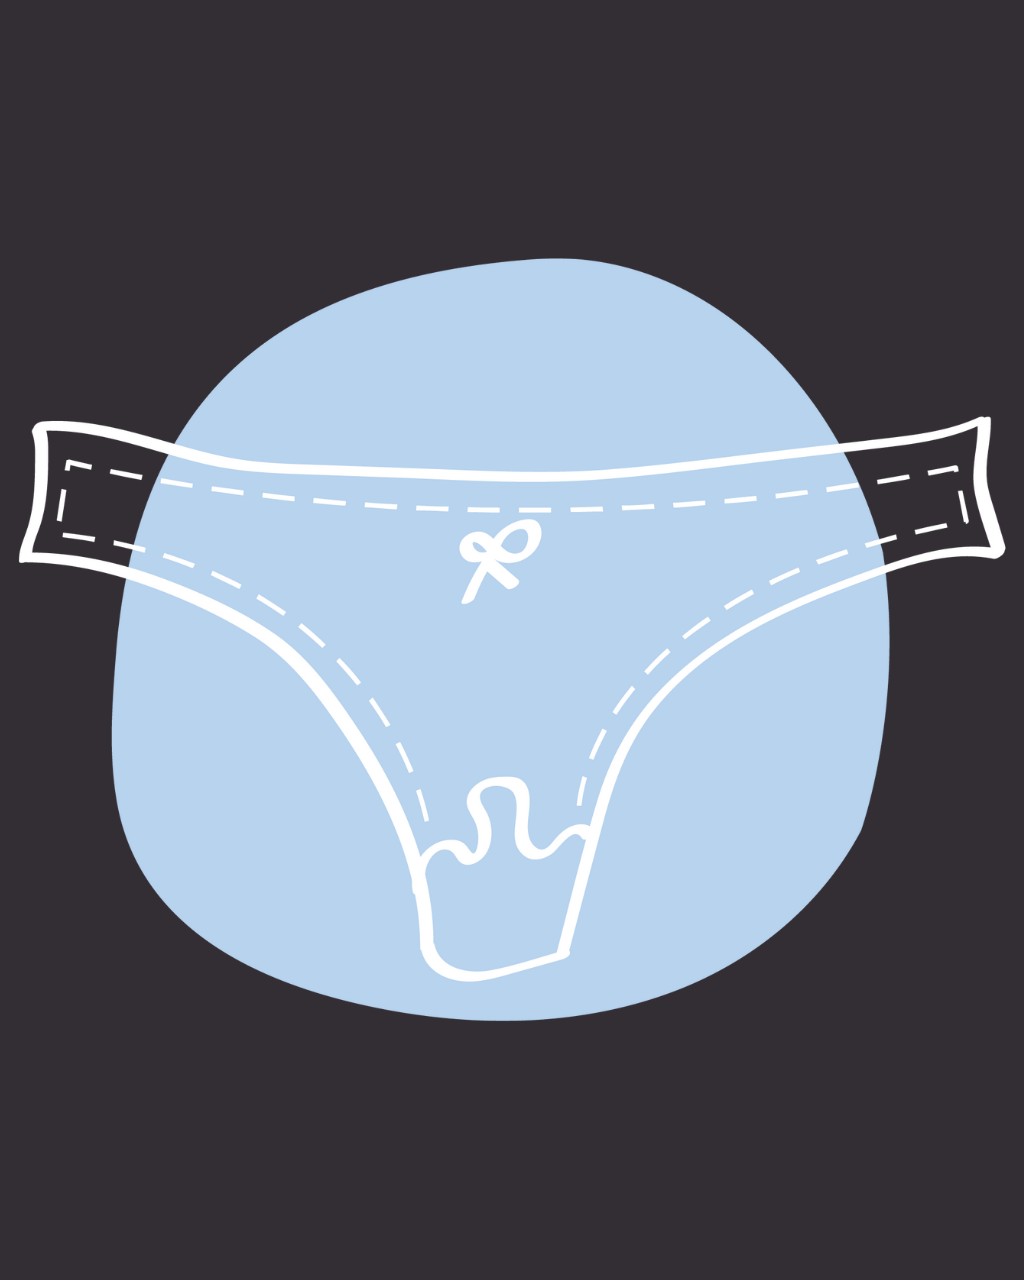 Discharge and Underwear: Is Vaginal Discharge Staining Your Underwear?